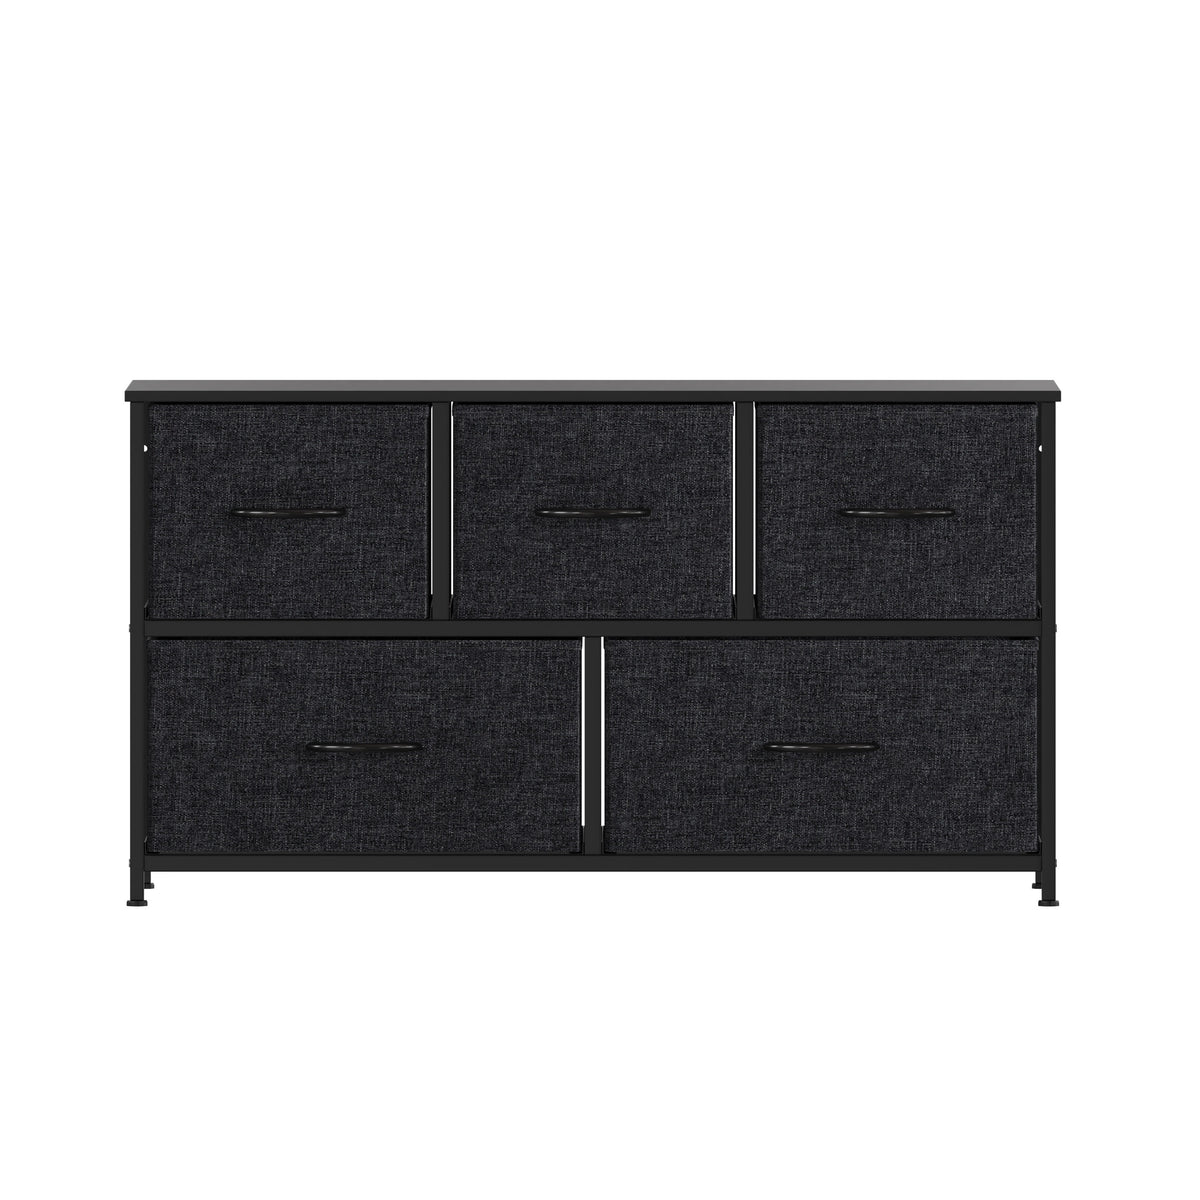 Black Drawers/Black Frame |#| 5 Drawer Dresser-Black Wood Top/Black Iron Frame/Black Drawers - Black Handles